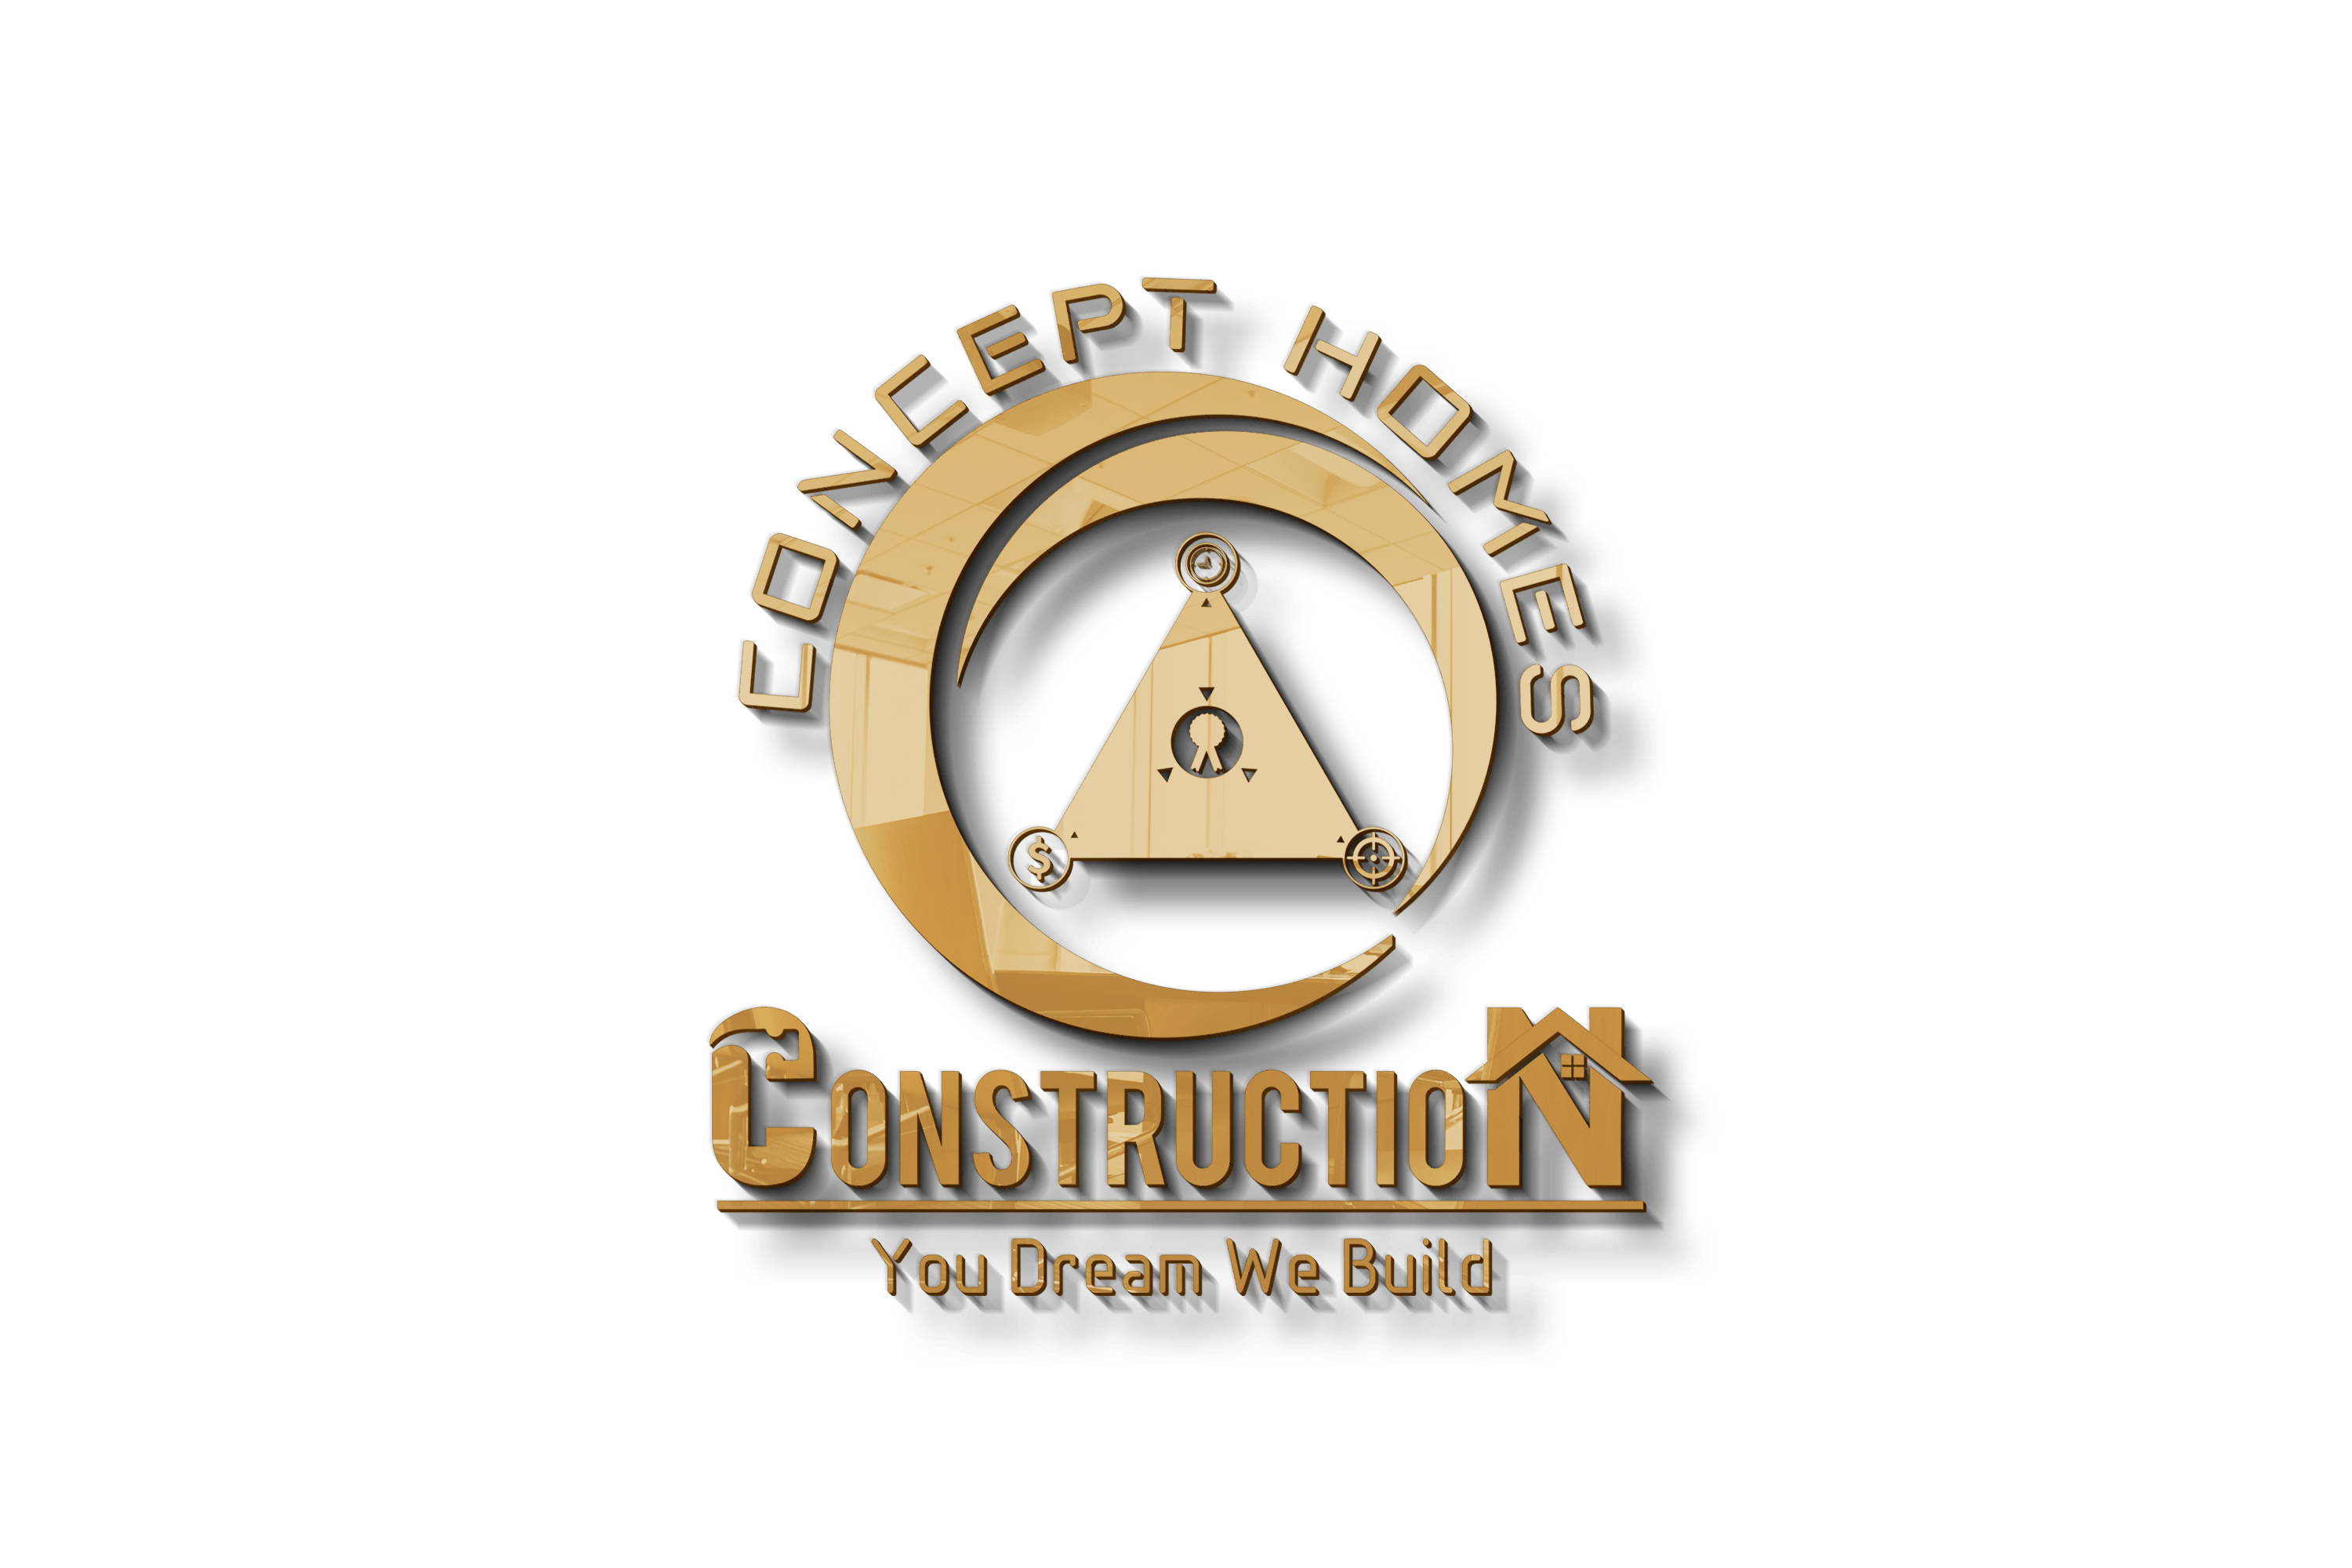 Concept Homes Construction|Legal Services|Professional Services